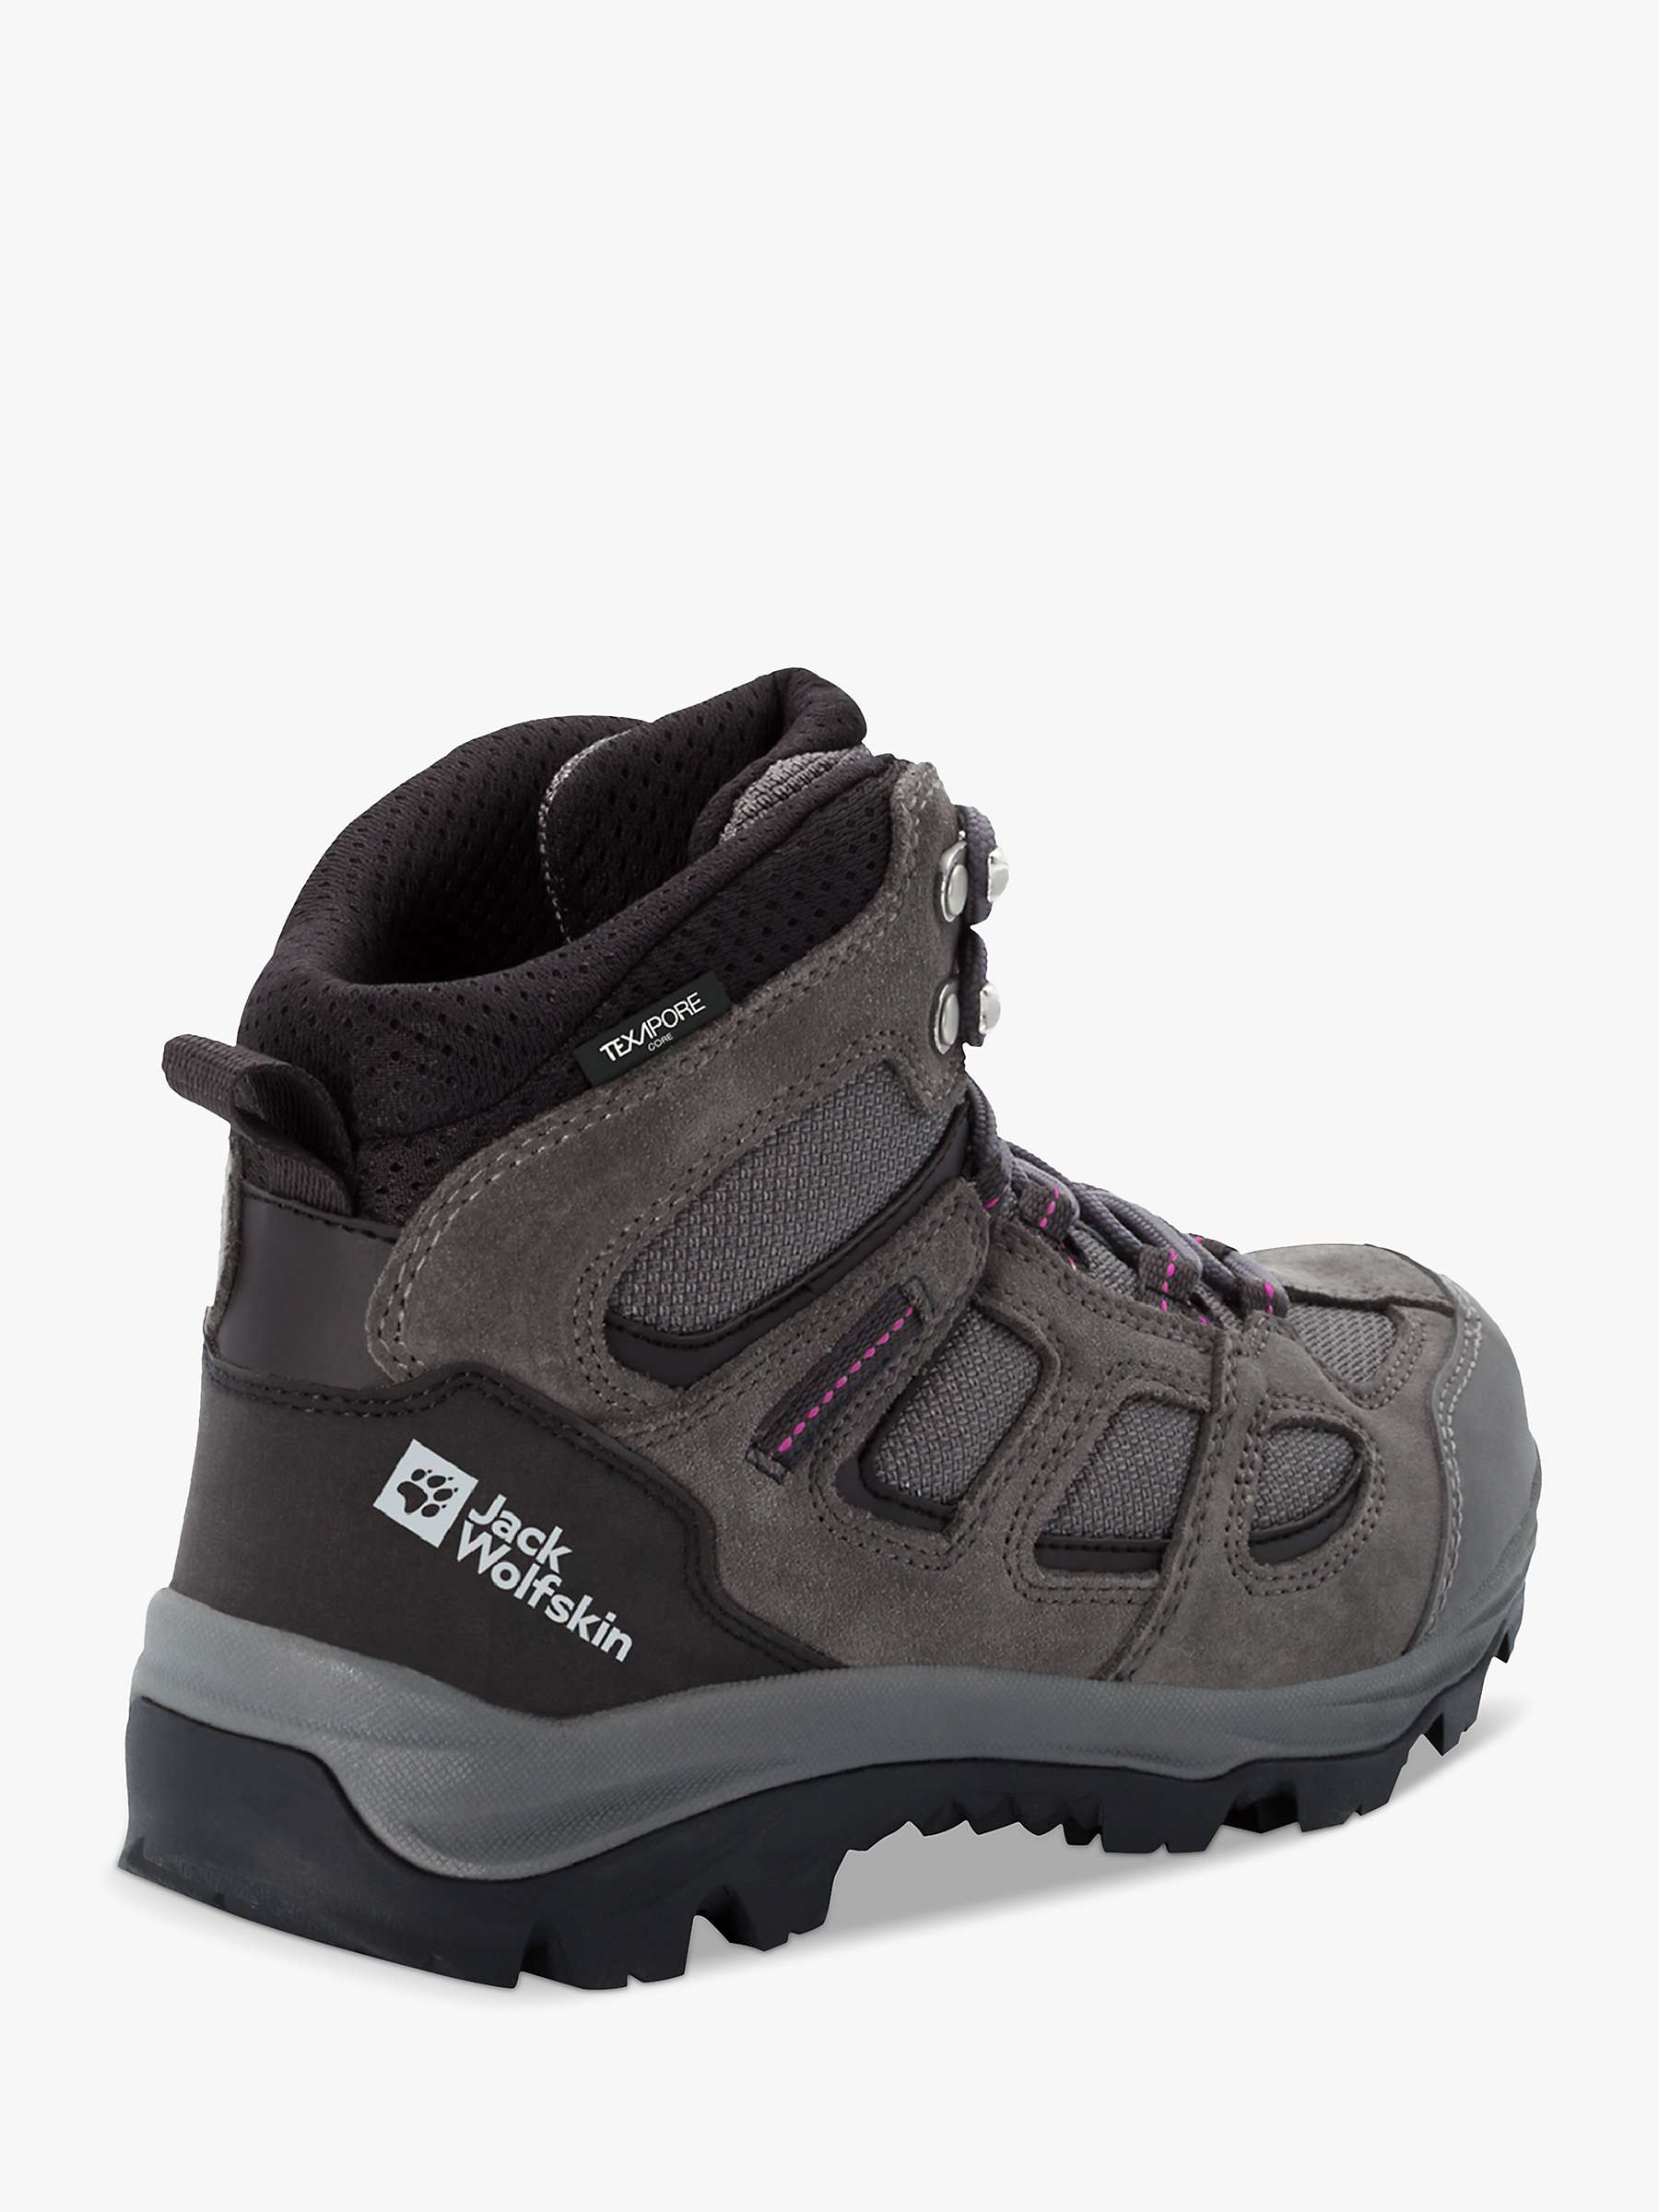 Buy Jack Wolfskin Vojo 3 Texapore Women's Waterproof Walking Boots, Tarmac Grey/Pink Online at johnlewis.com